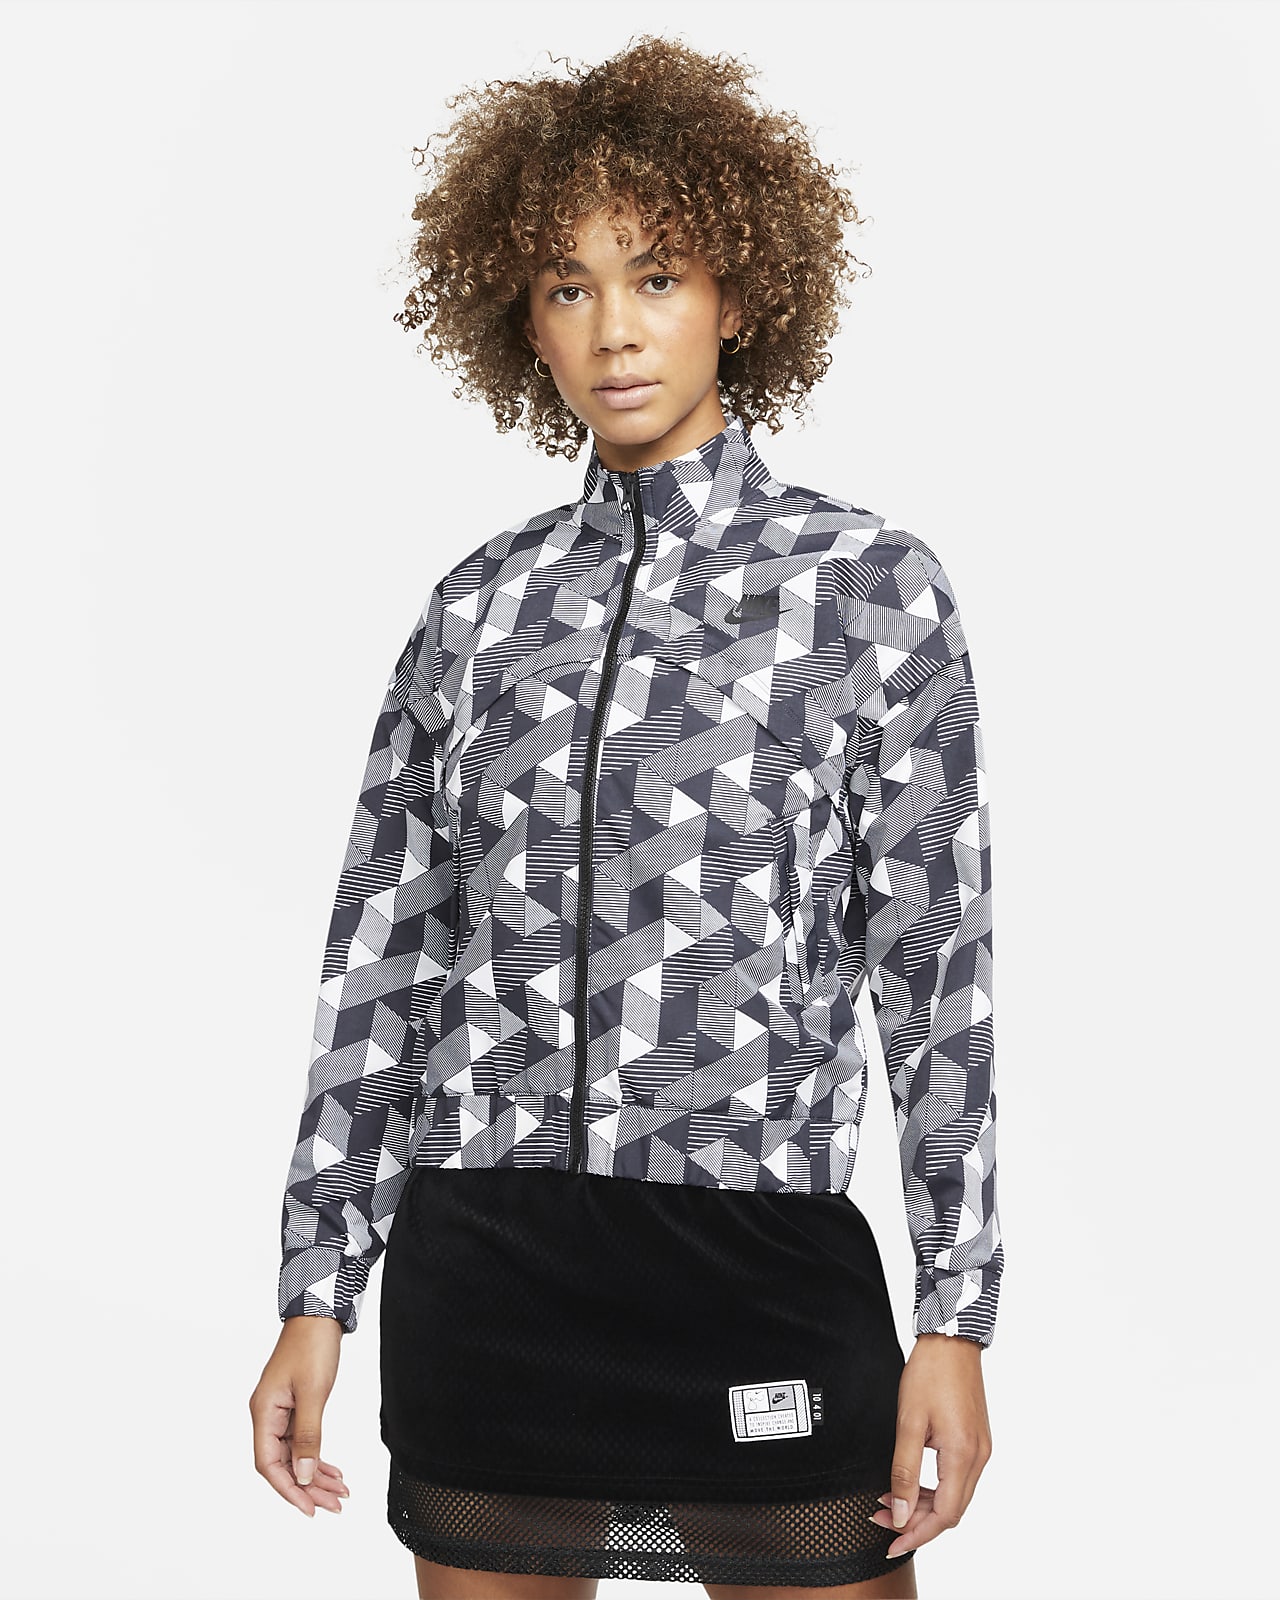 Serena Williams Design Crew Women's Long-Sleeve Tennis Jacket